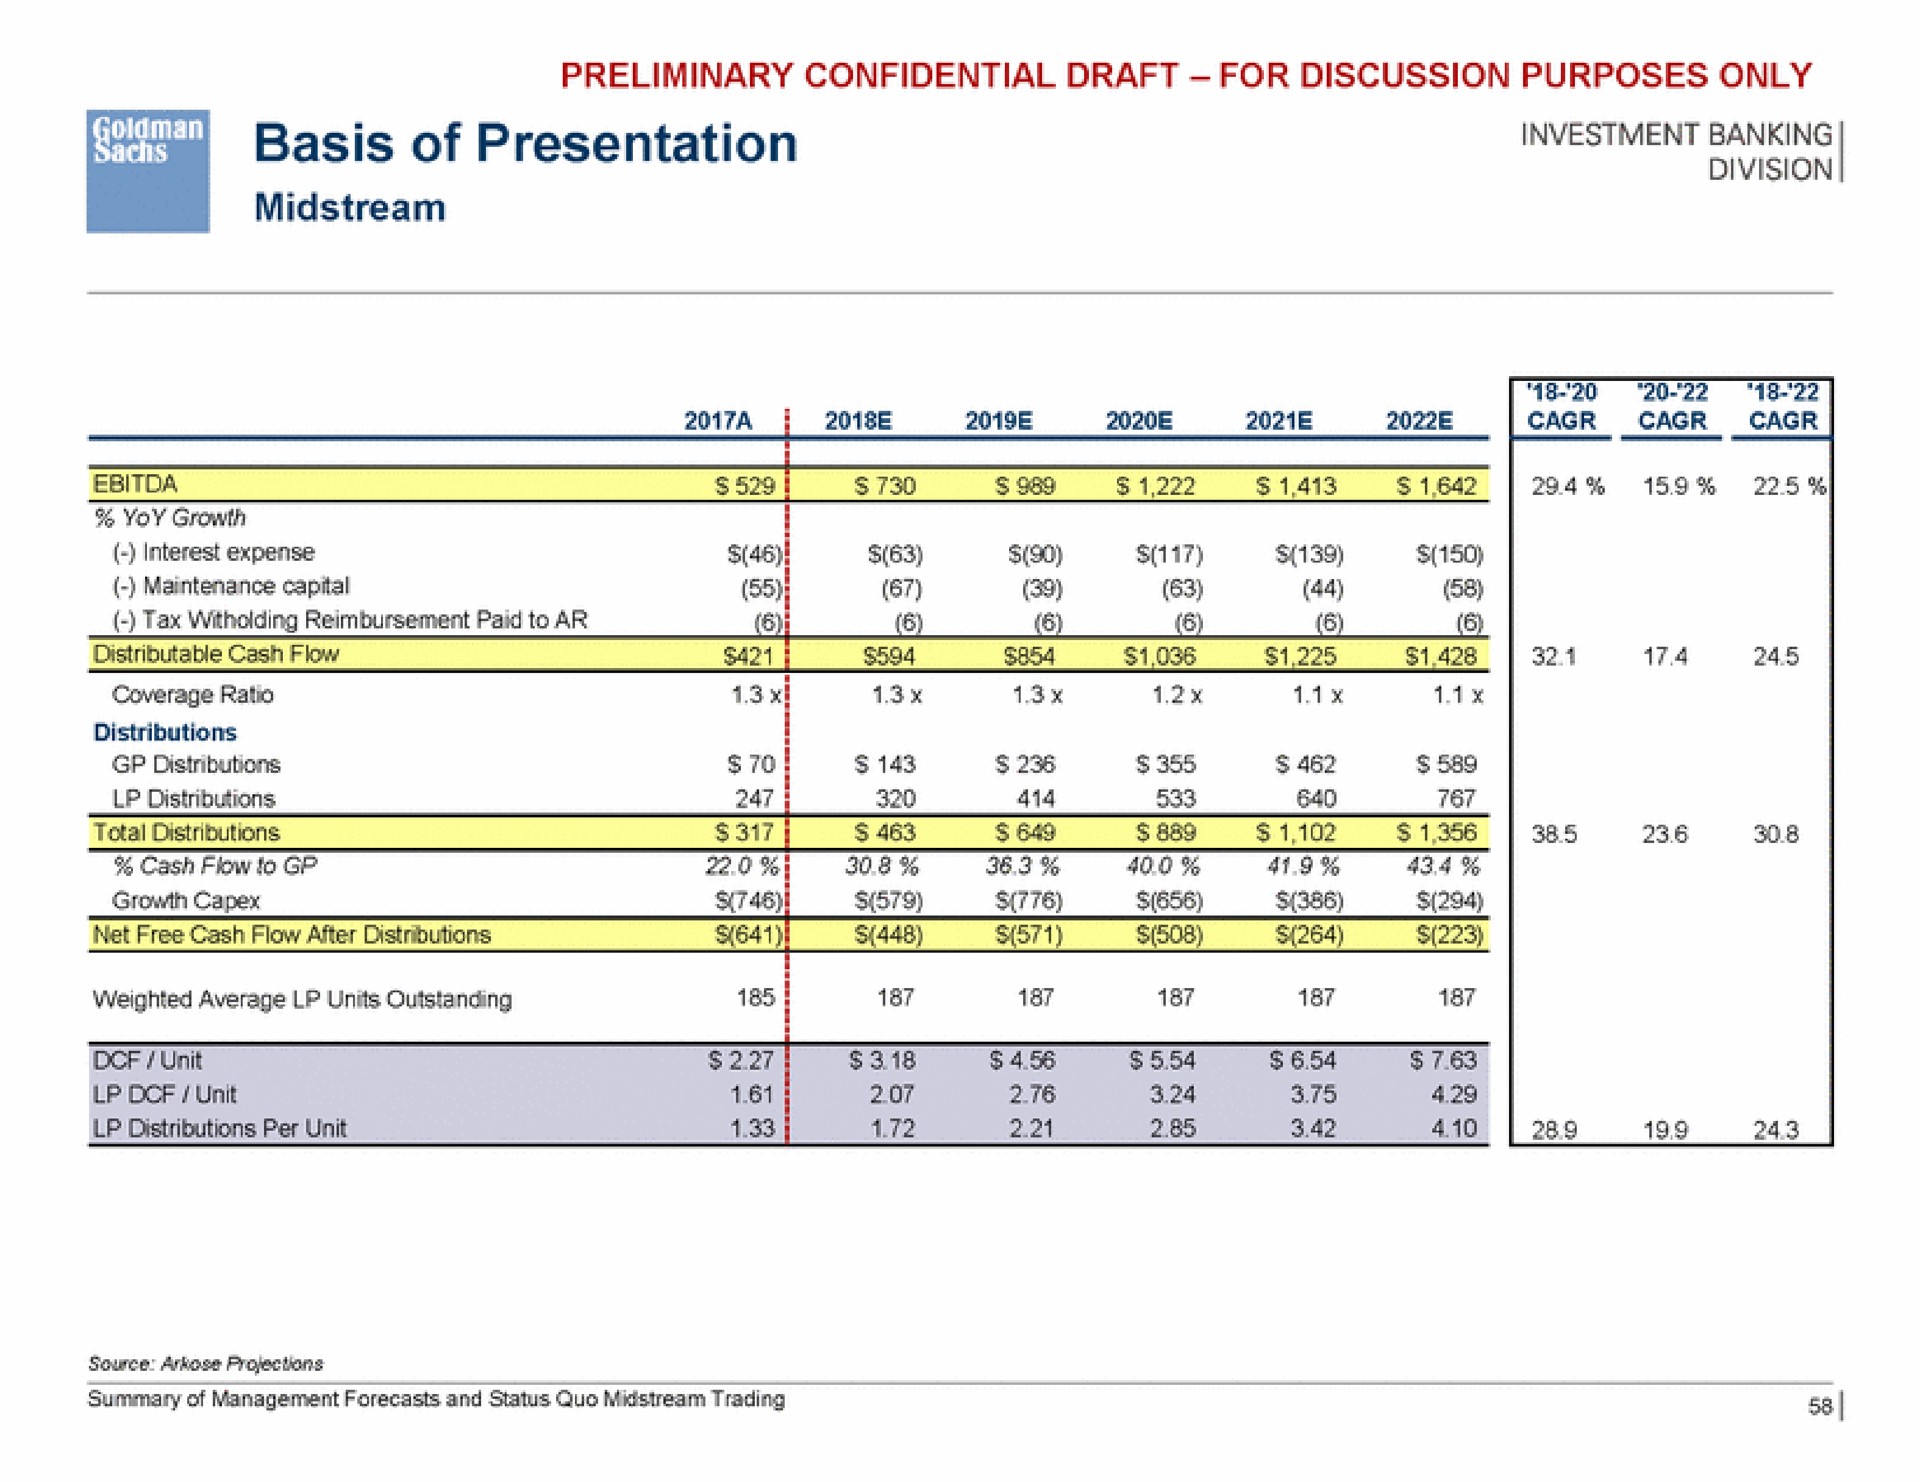 basis of presentation | Goldman Sachs